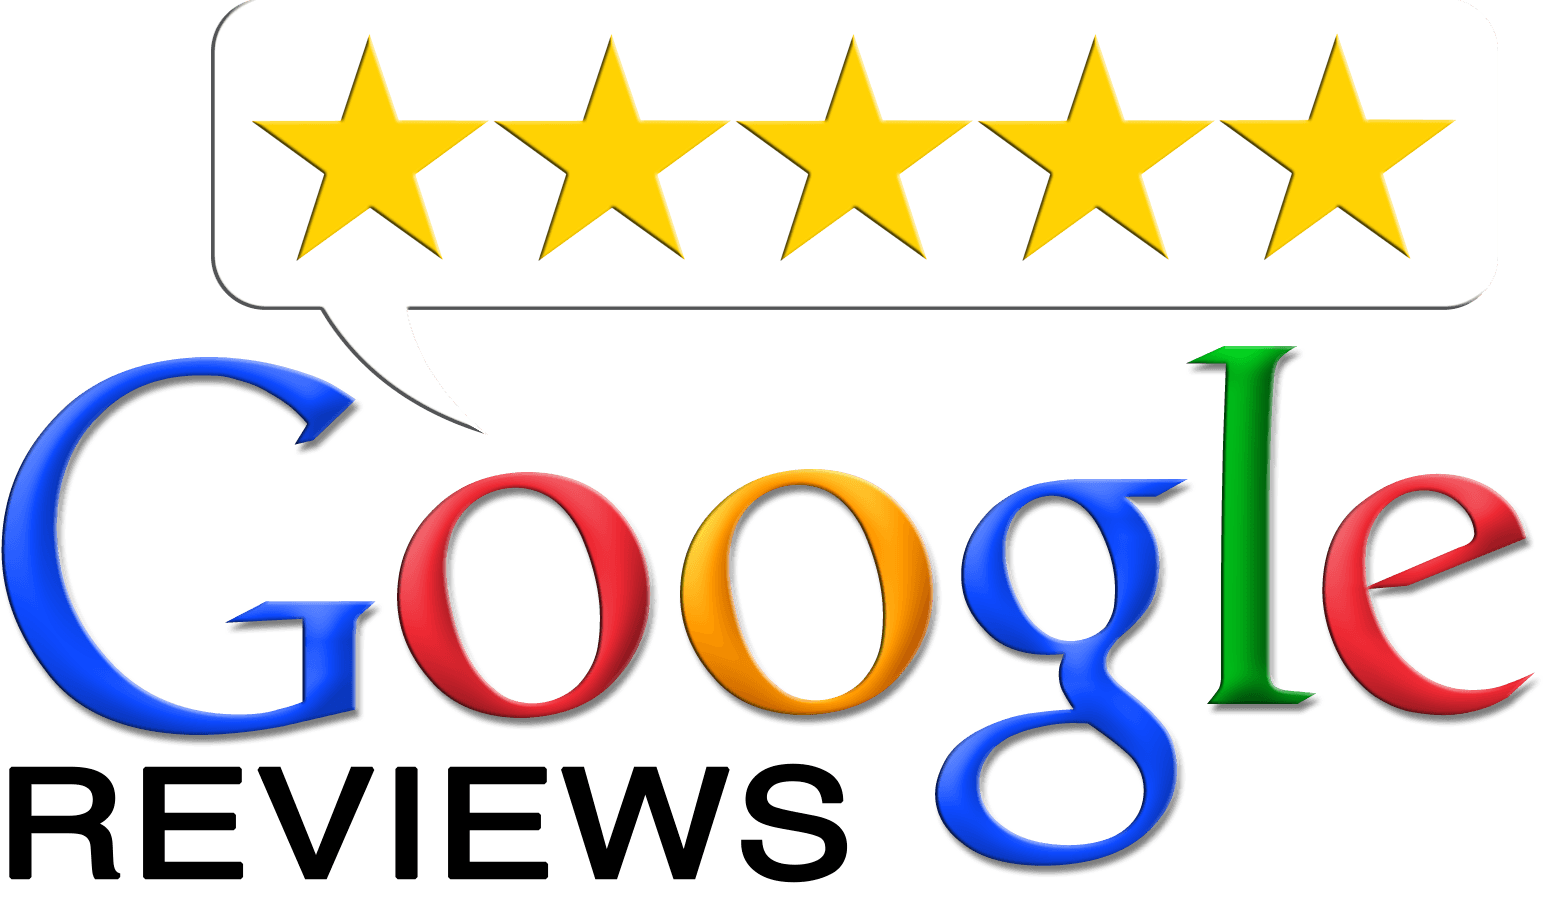 Check Our Google Reviews